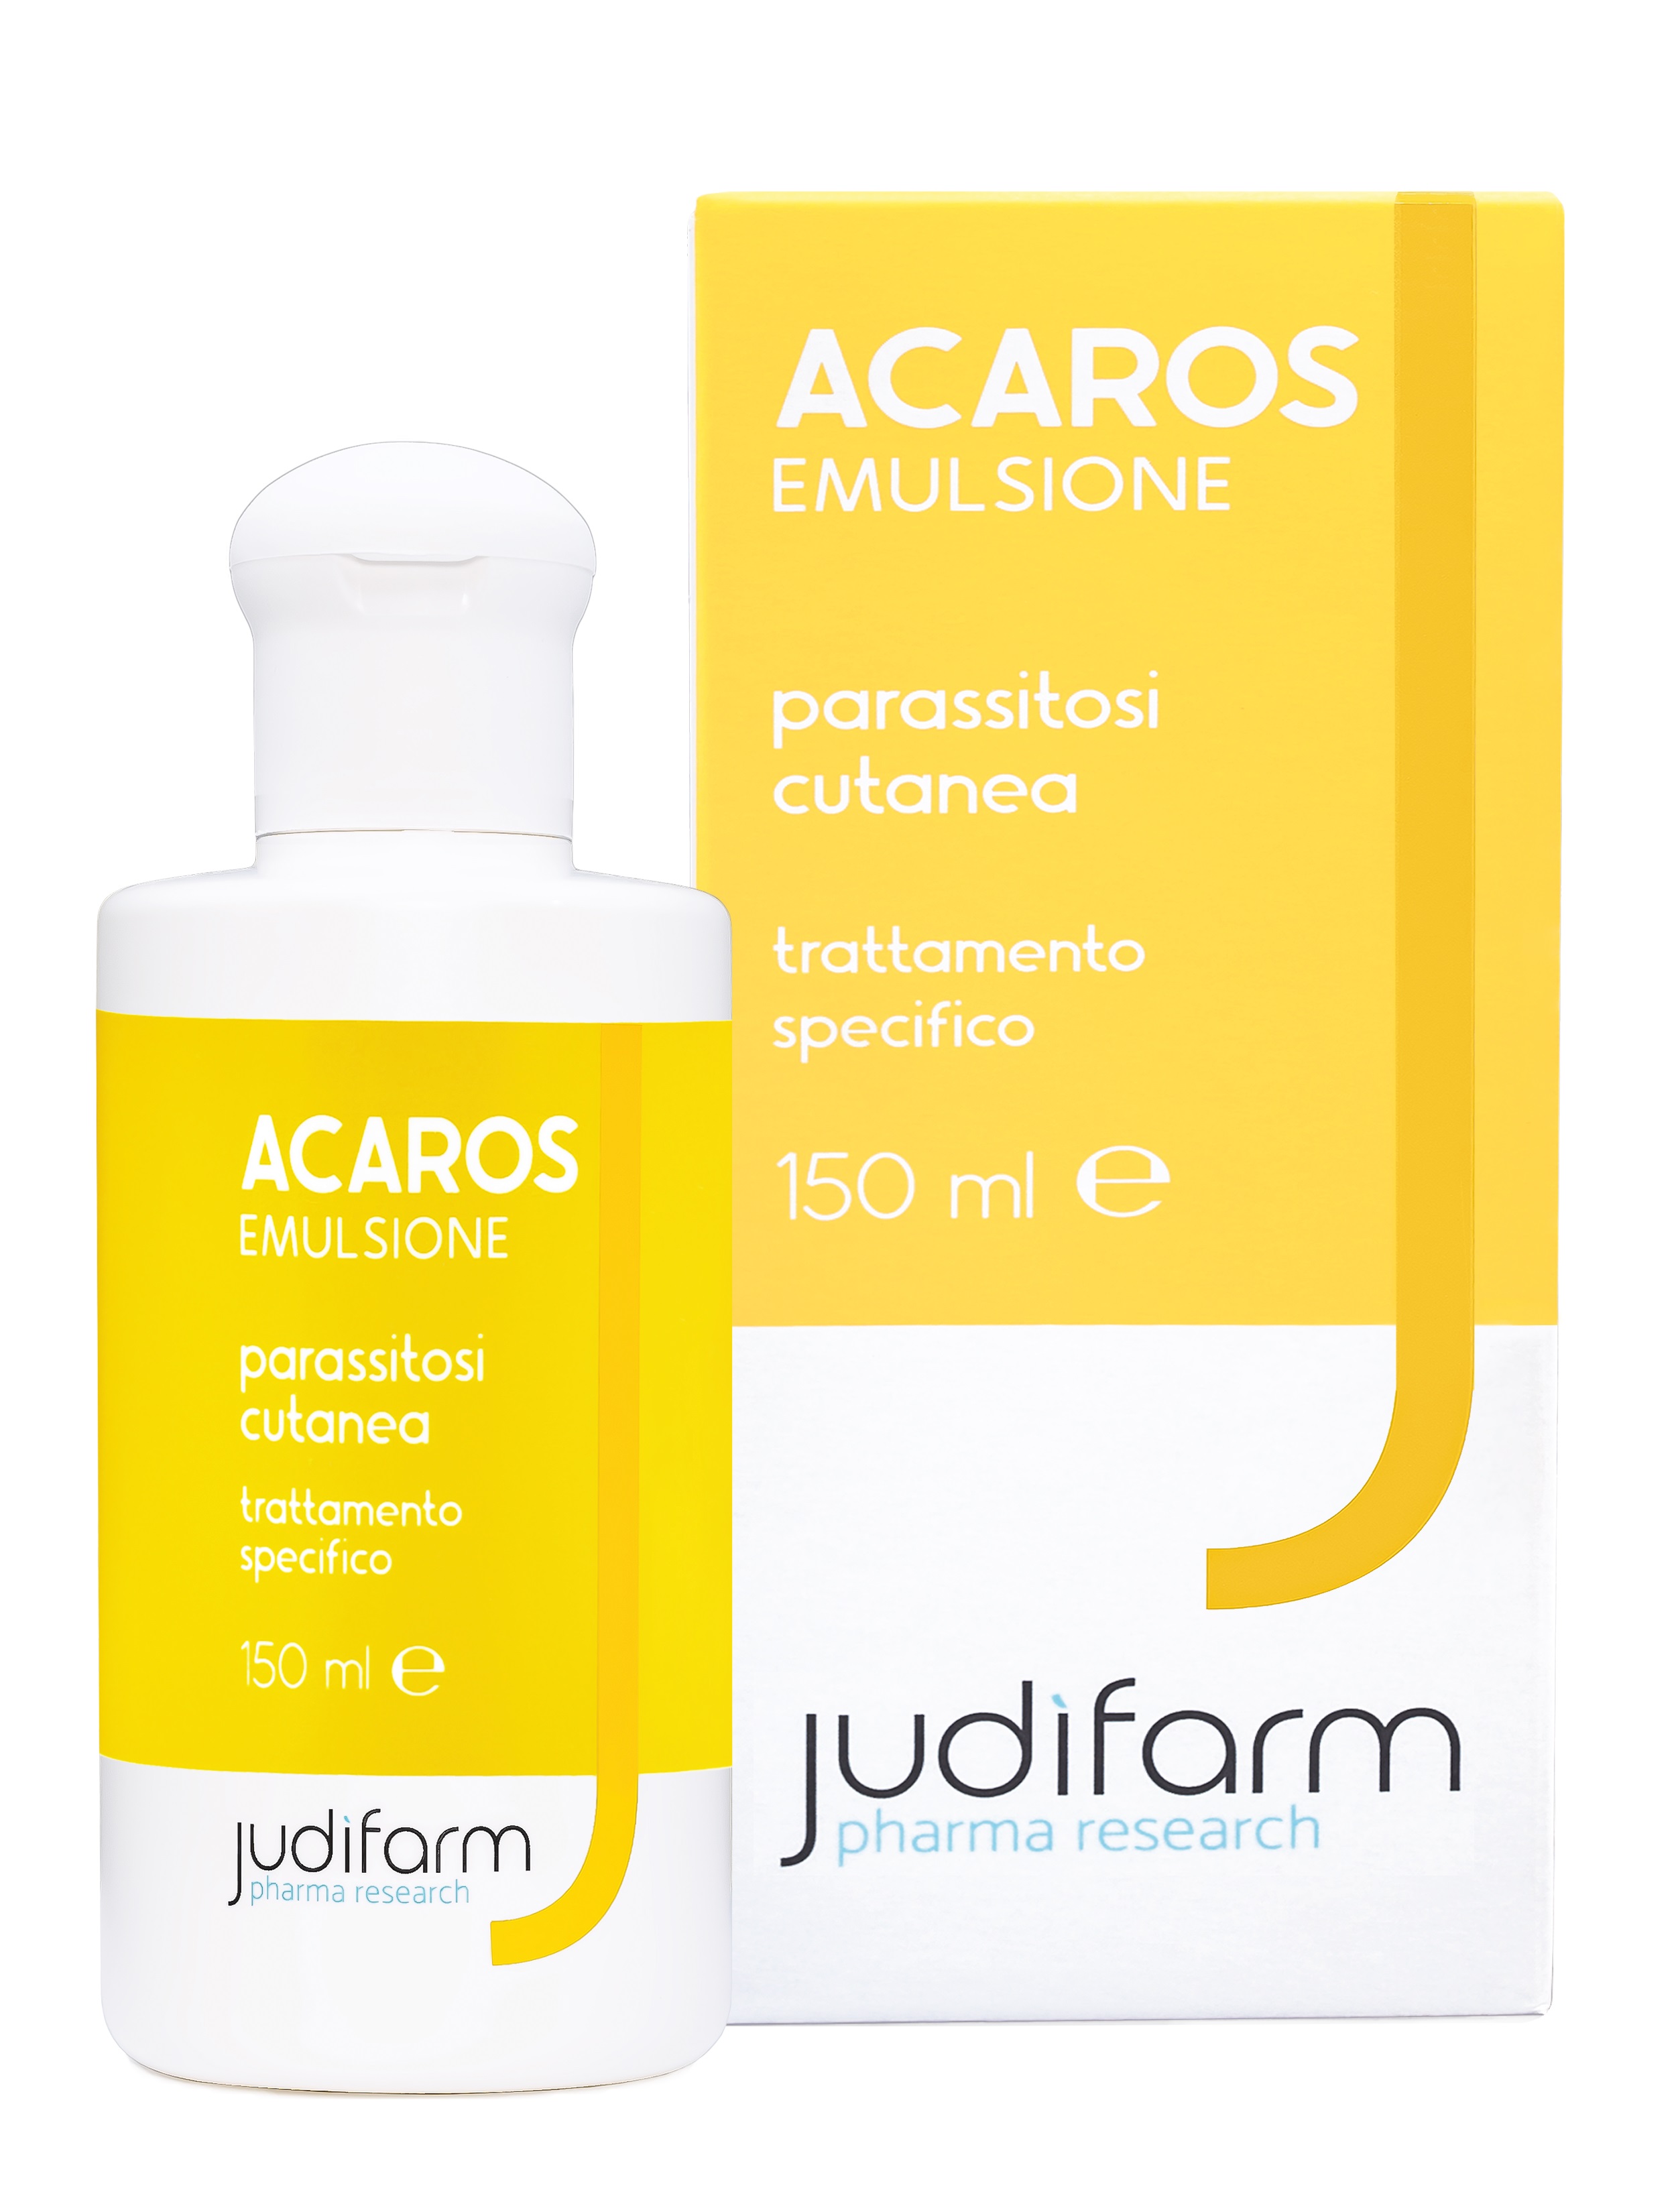 Image of Acaros Emulsione Judìfarm 150ml